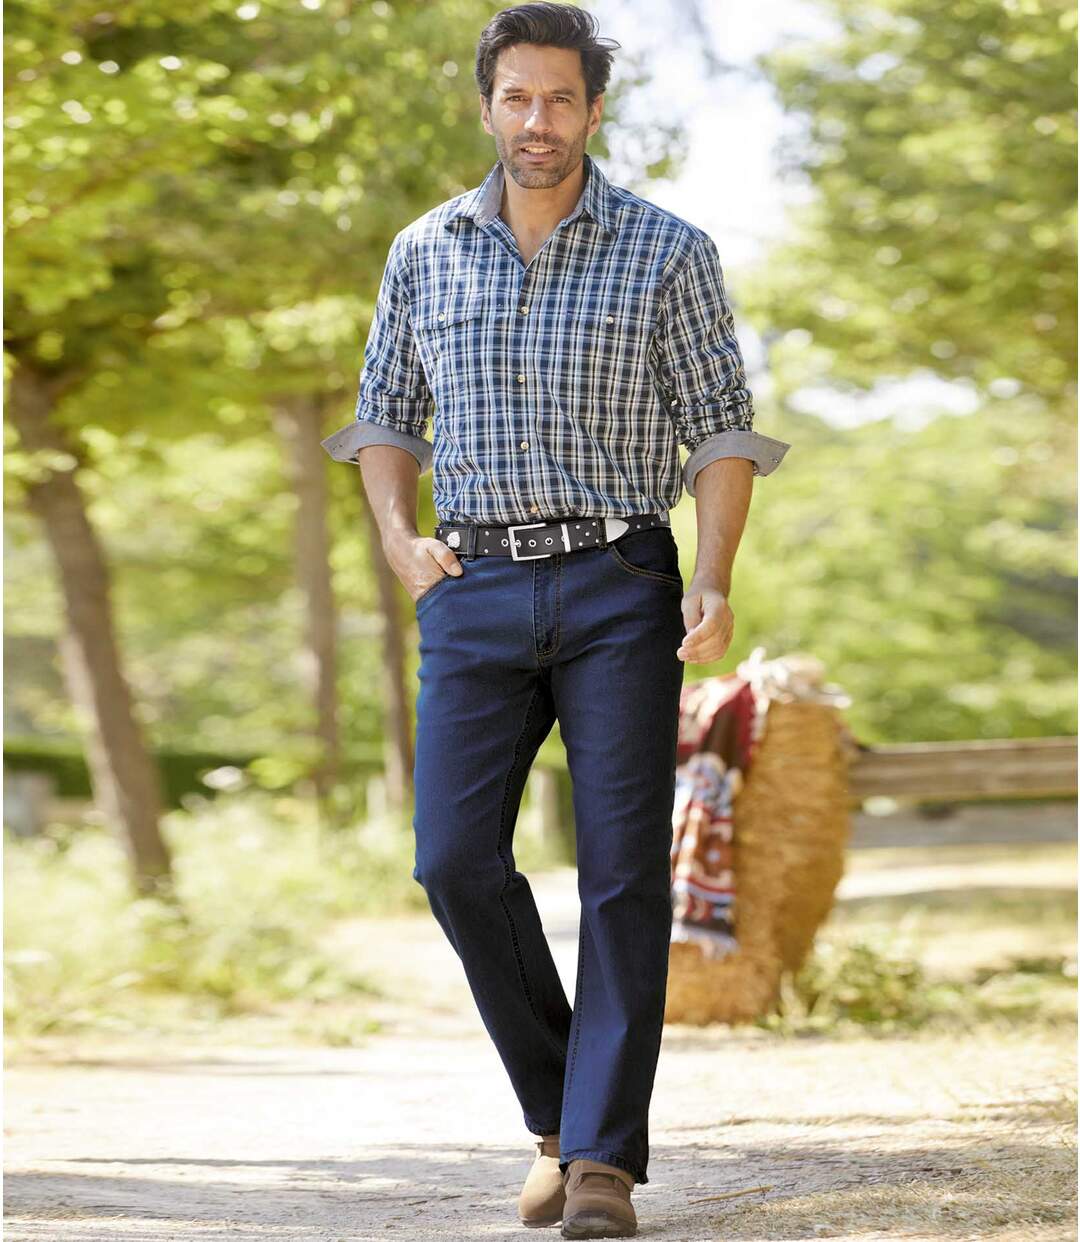 Modré strečové džíny rovného střihu Regular Atlas For Men